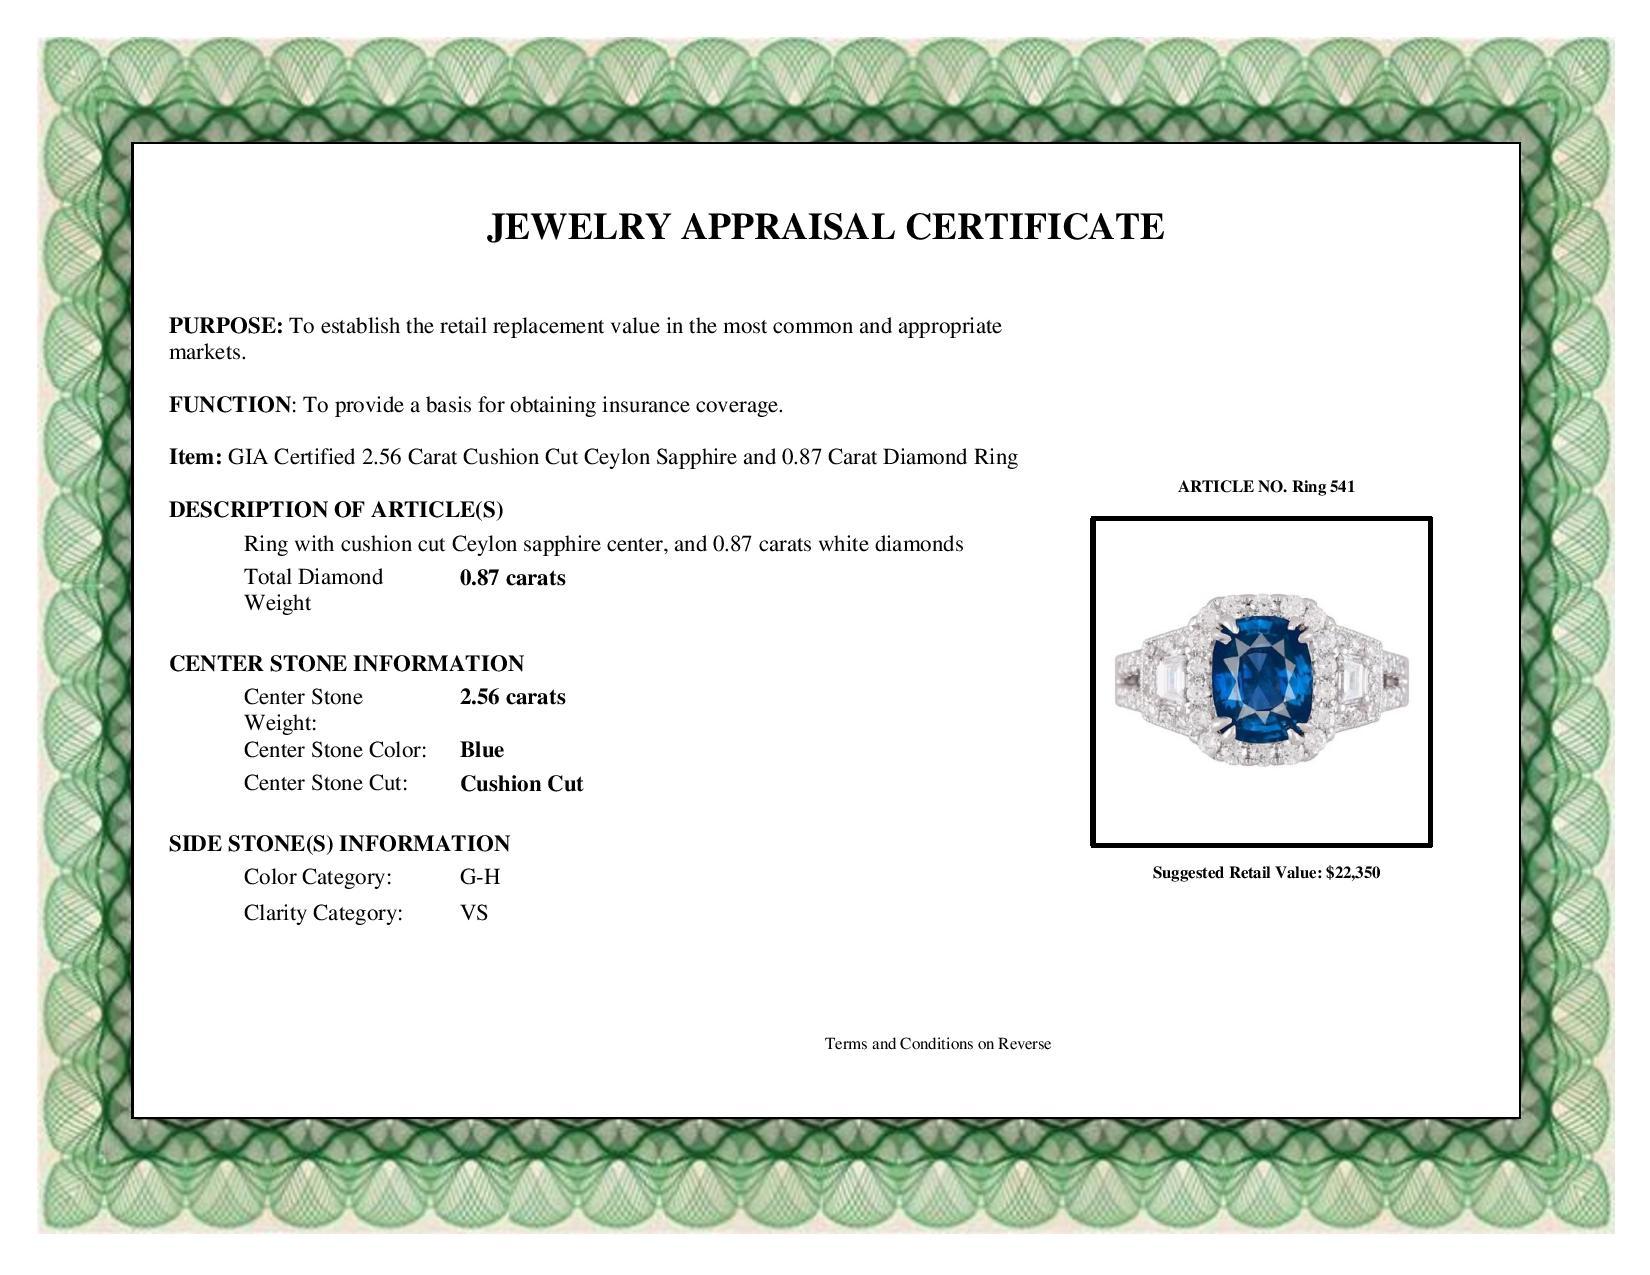 DiamondTown GIA Certified 2.56 Carat Cushion Cut Ceylon Sapphire Ring 7